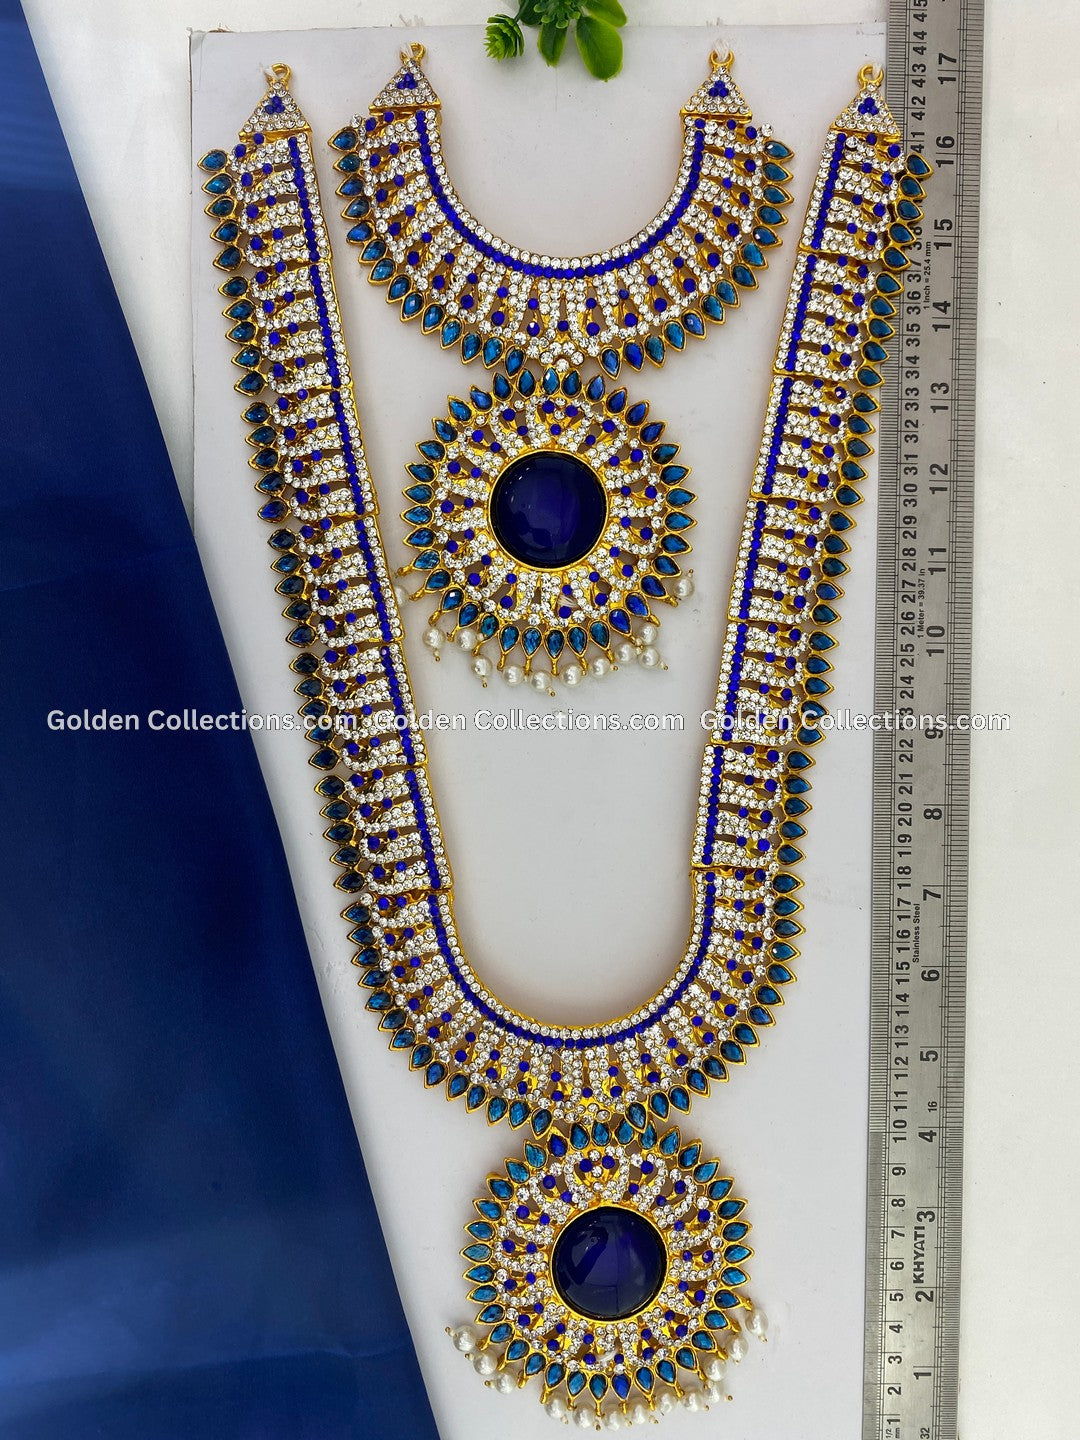 Ornate Deity Long Necklace - Divine Splendor - GoldenCollections